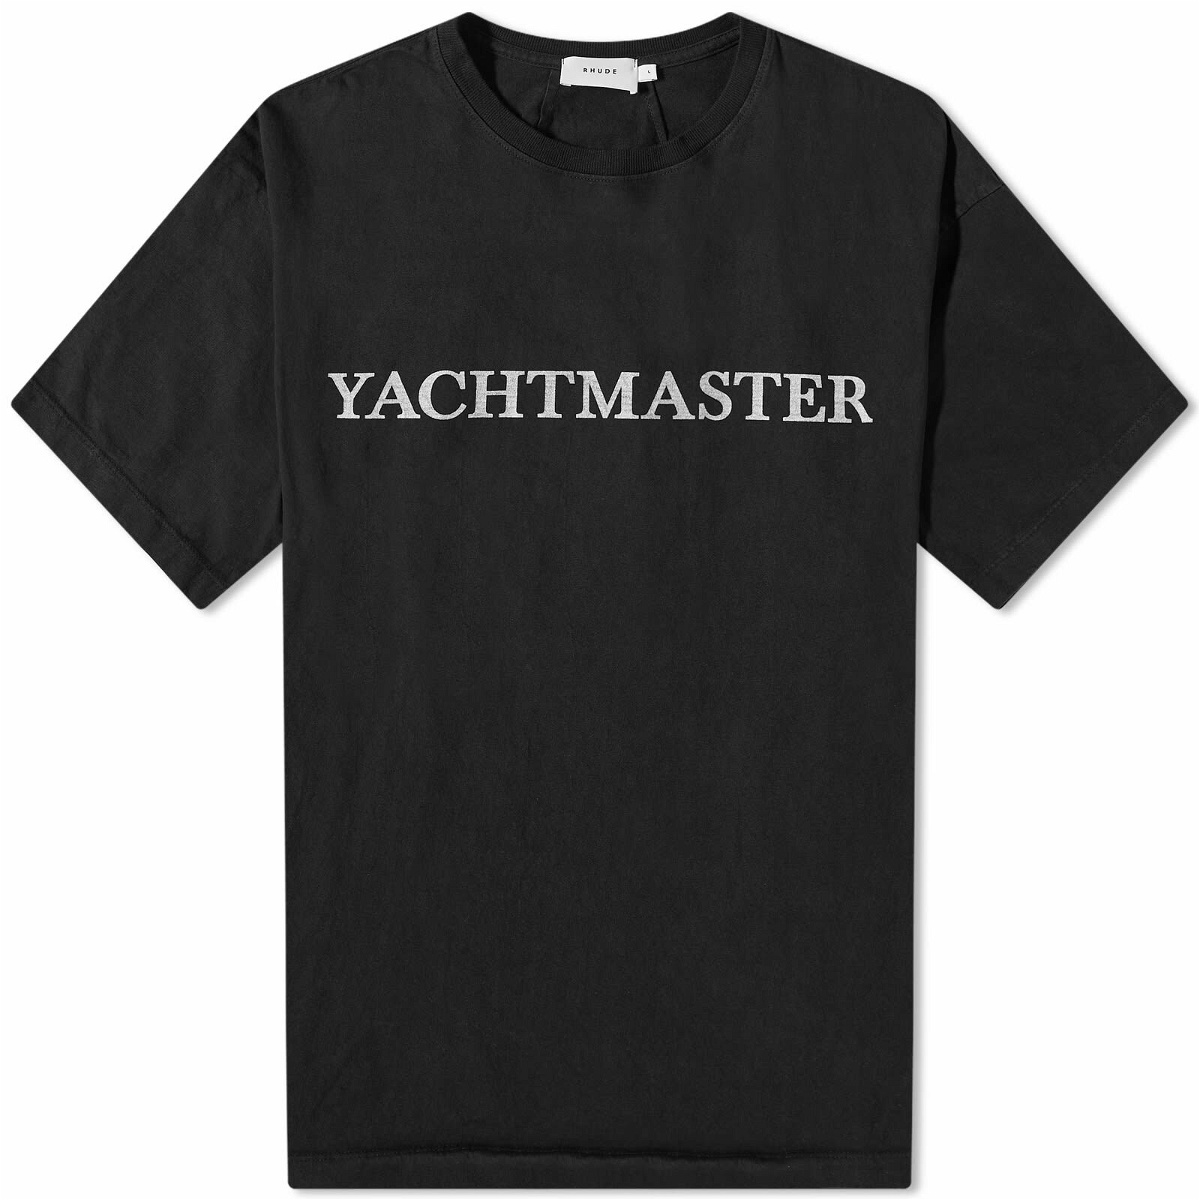 yachtmaster t shirt